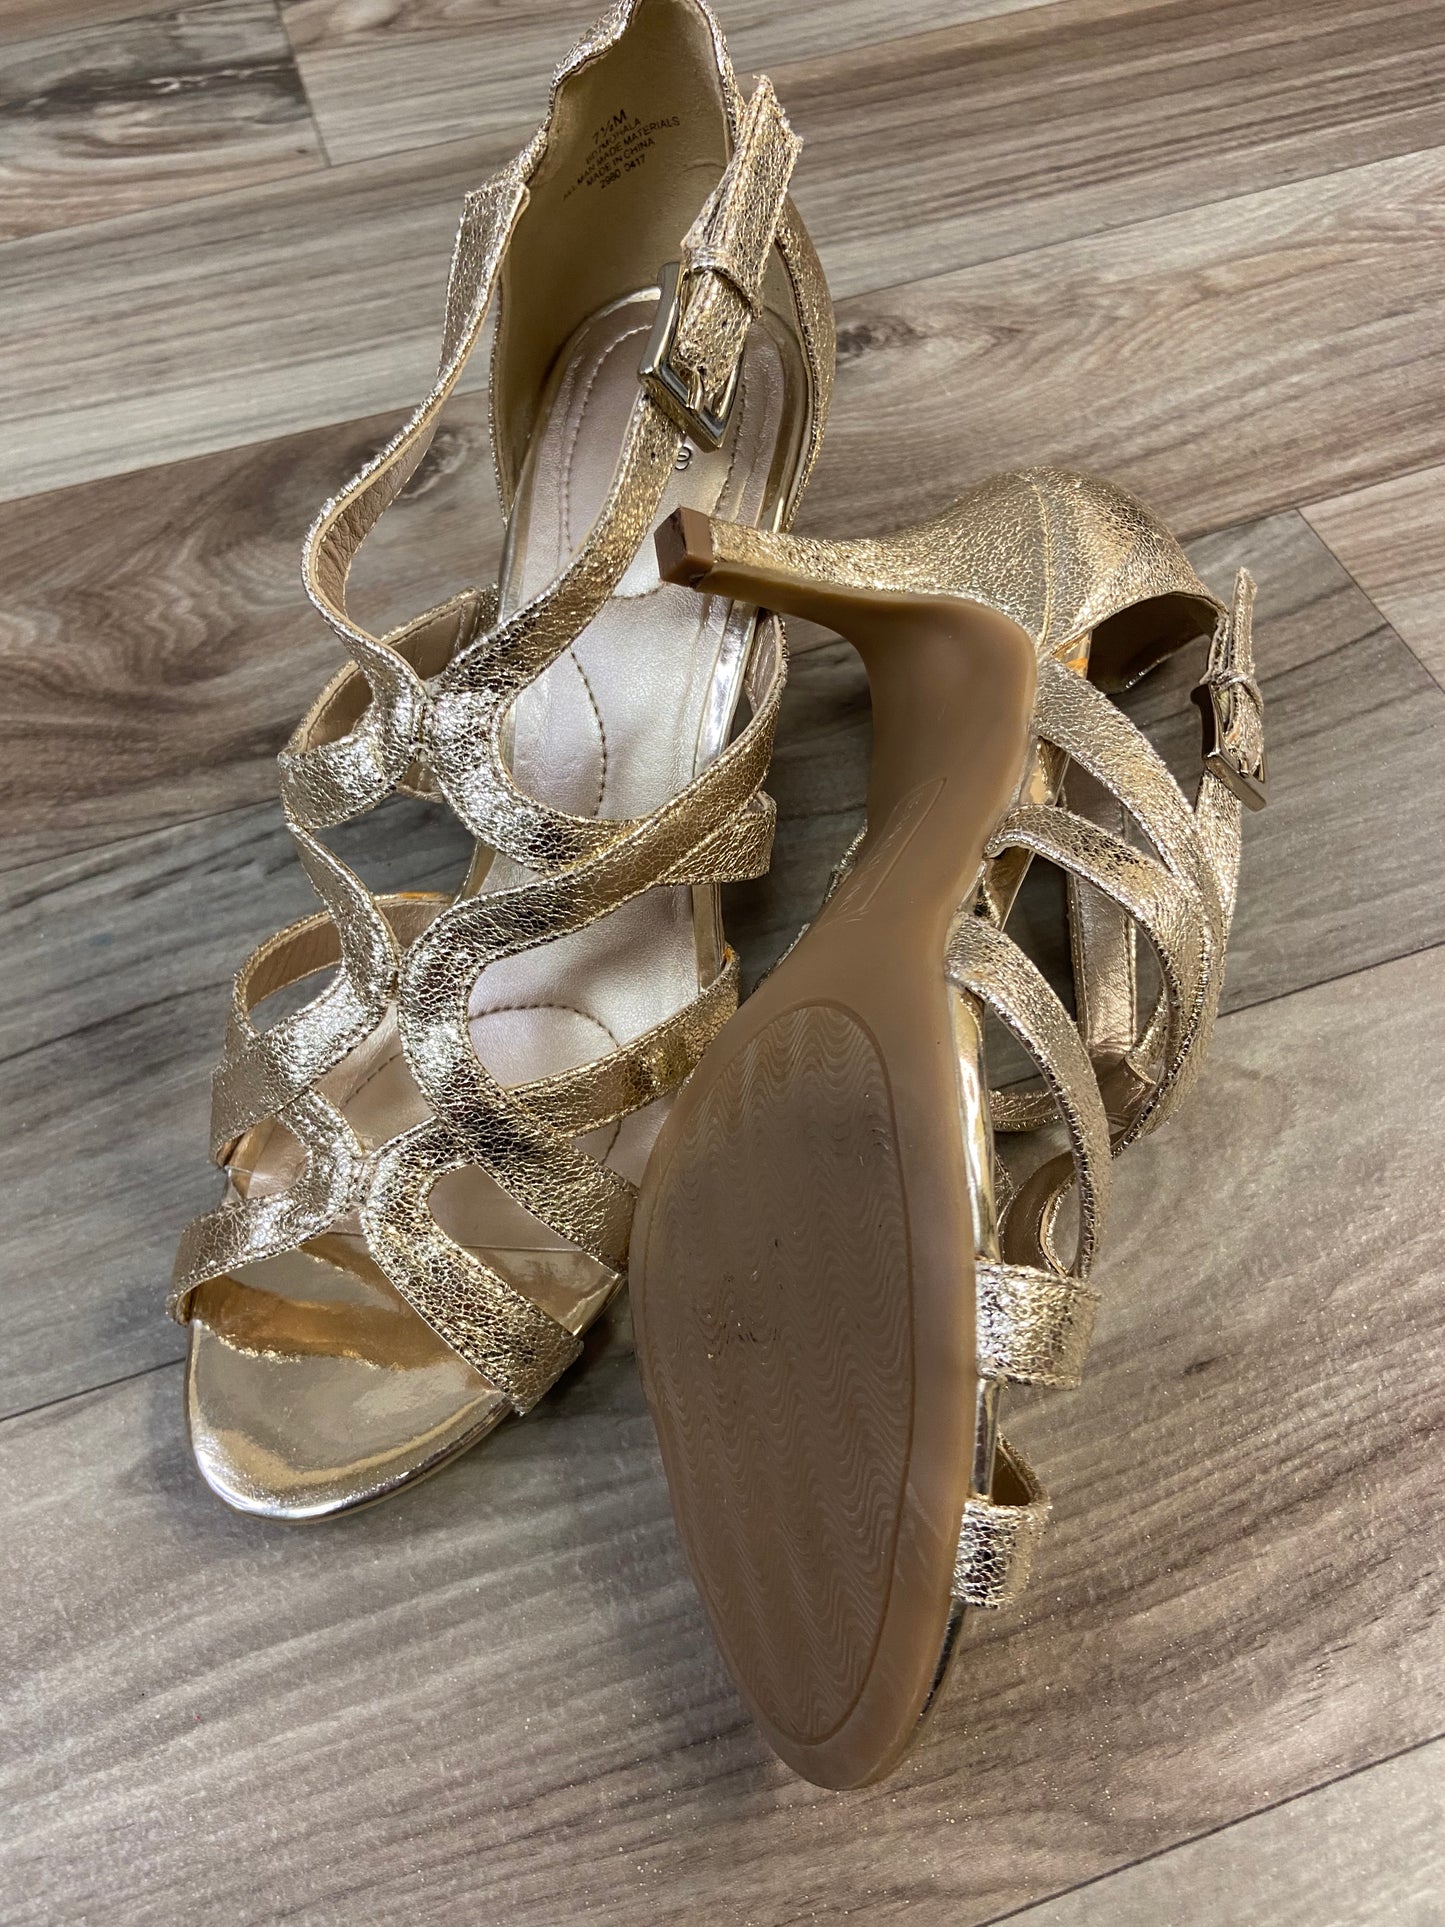 Sandals Heels Stiletto By Bandolino  Size: 7.5